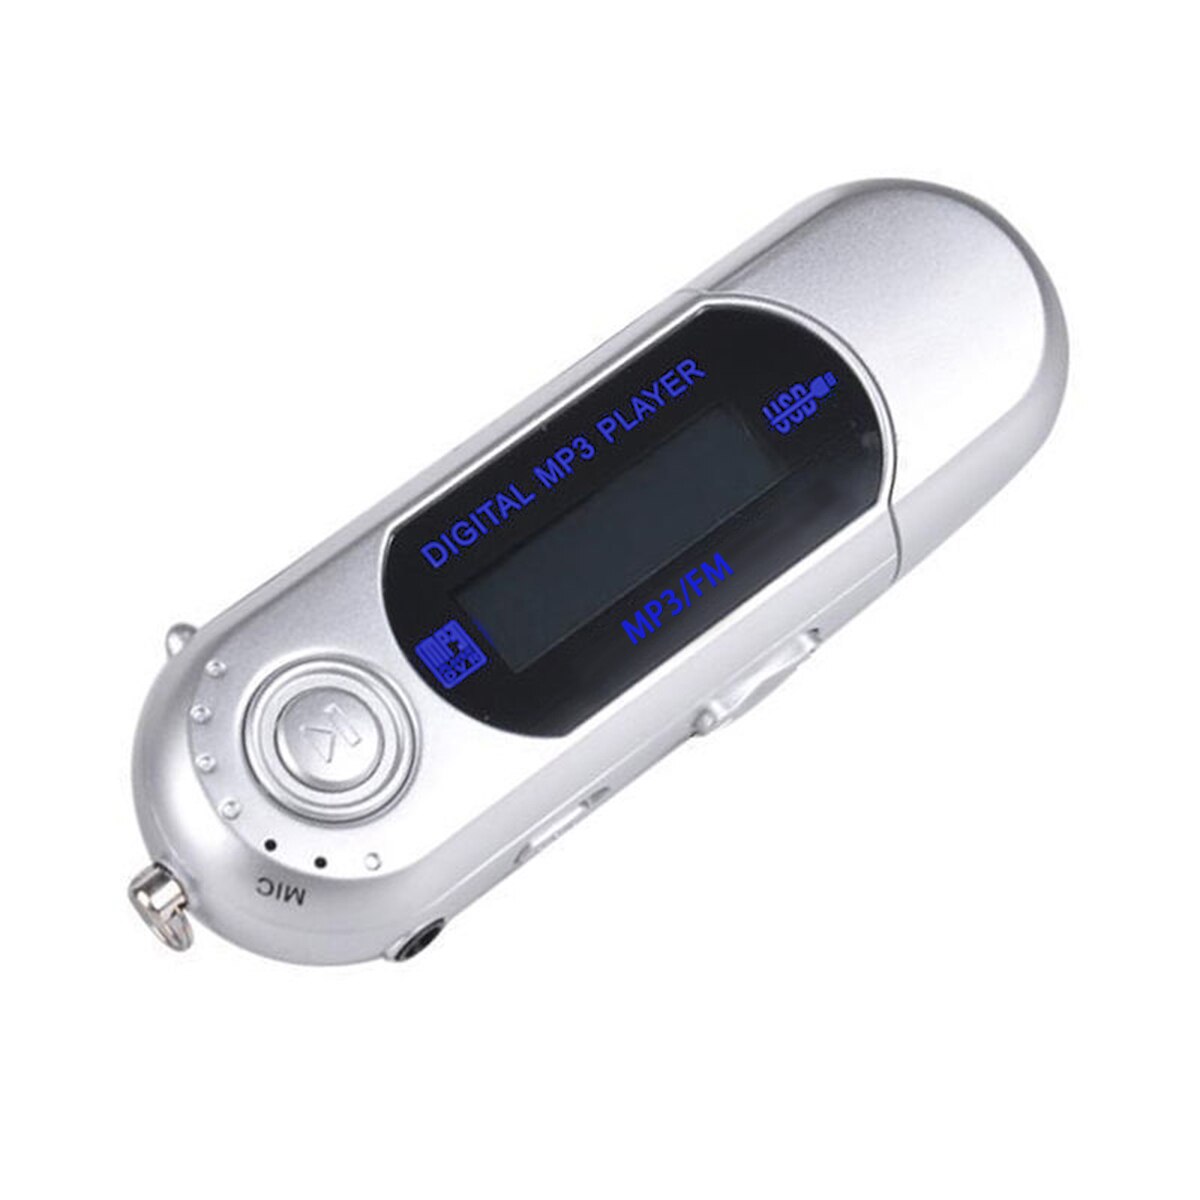 SOONHUA Tragbare USB Mp3 Spieler Multifunktions FM Radio MP3 Spieler Mini Digital Musik Spieler Unterstützung 32GB TF Karte LCD bildschirm